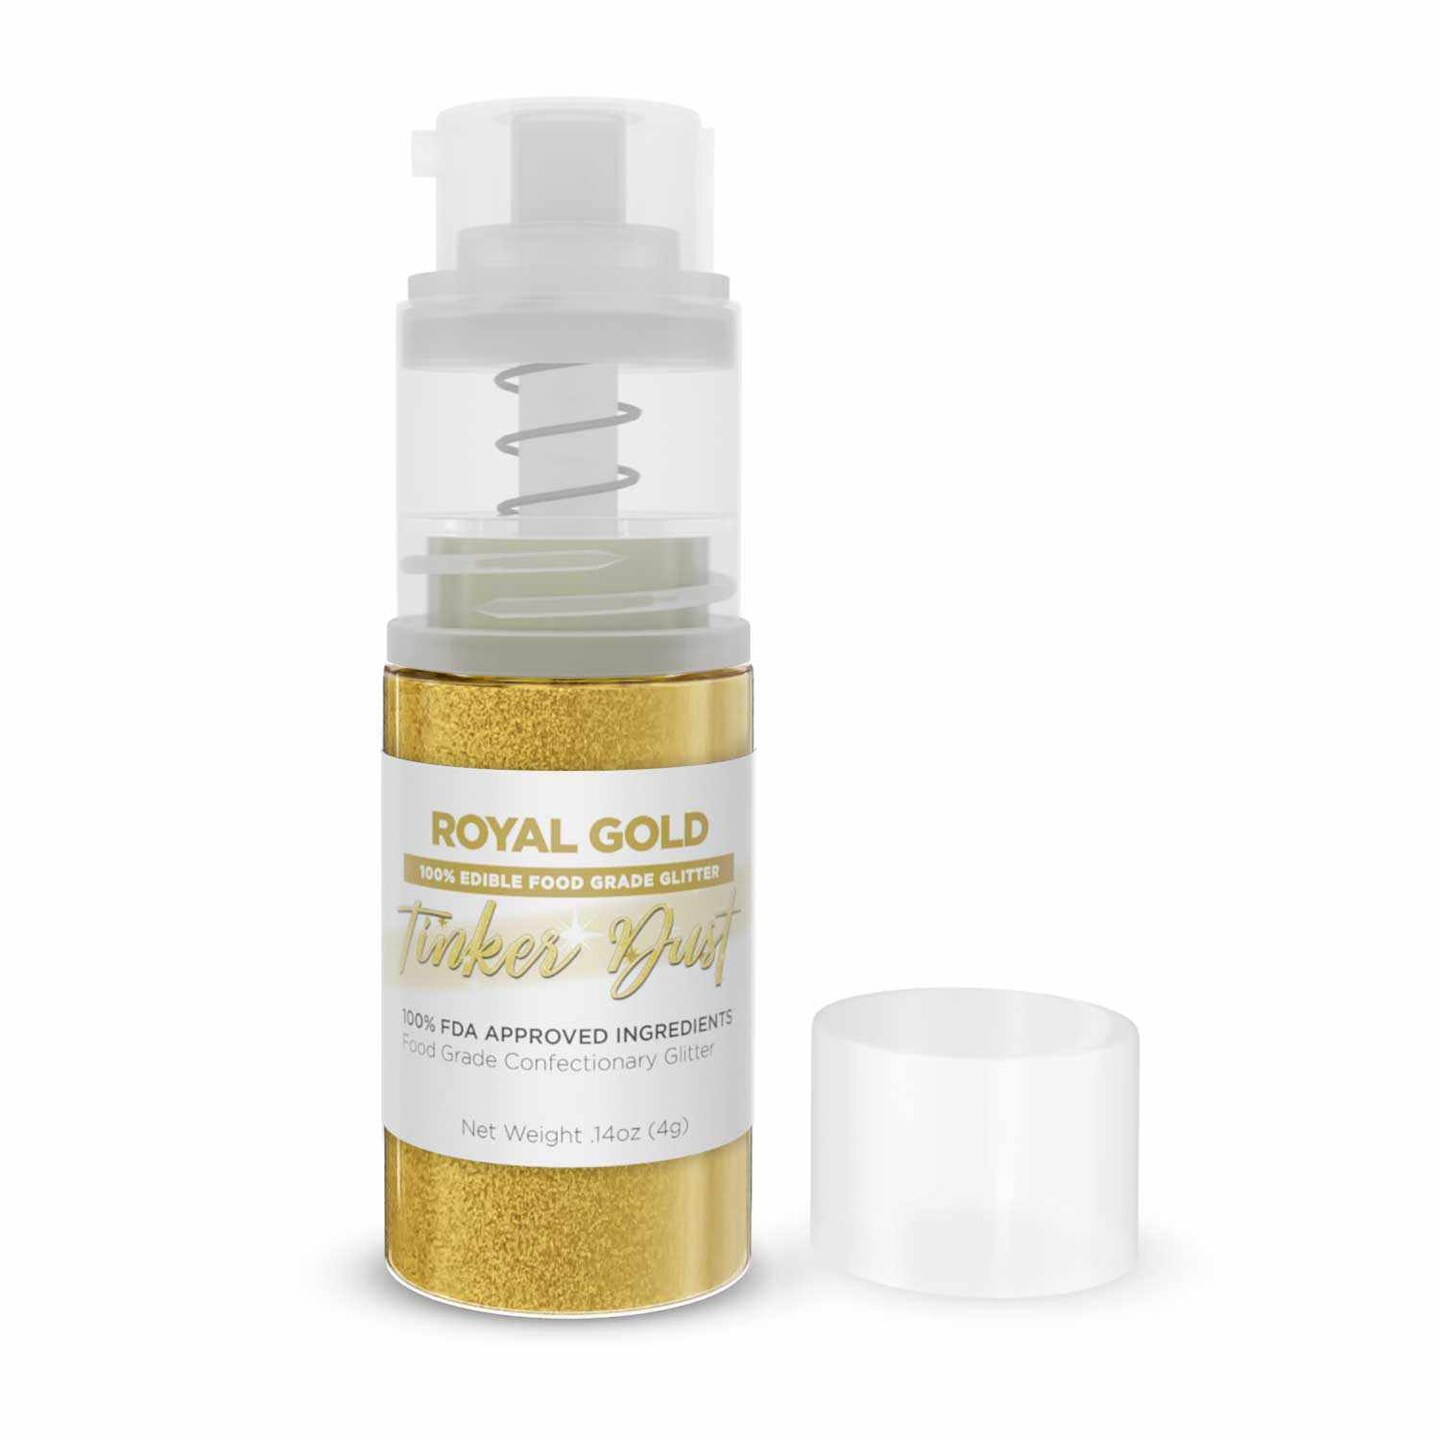 Royal Gold Edible Glitter Spray - Edible Powder Dust Spray Glitter for Food, Drinks, Strawberries, Muffins, Cake Decorating. FDA Compliant (4 Gram Pump)